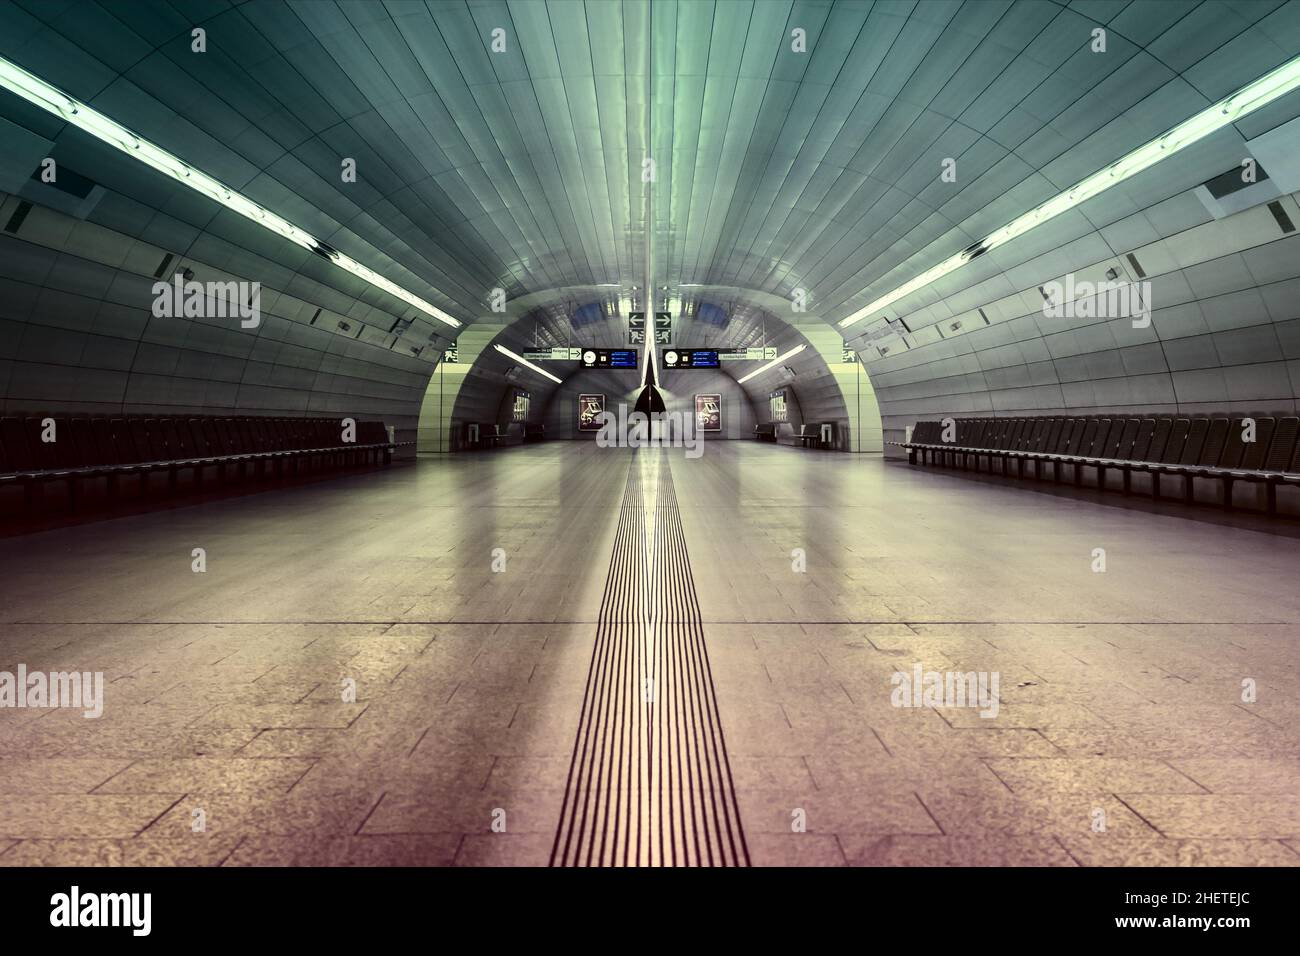 symmetric underground station hall with colored illumination Stock Photo